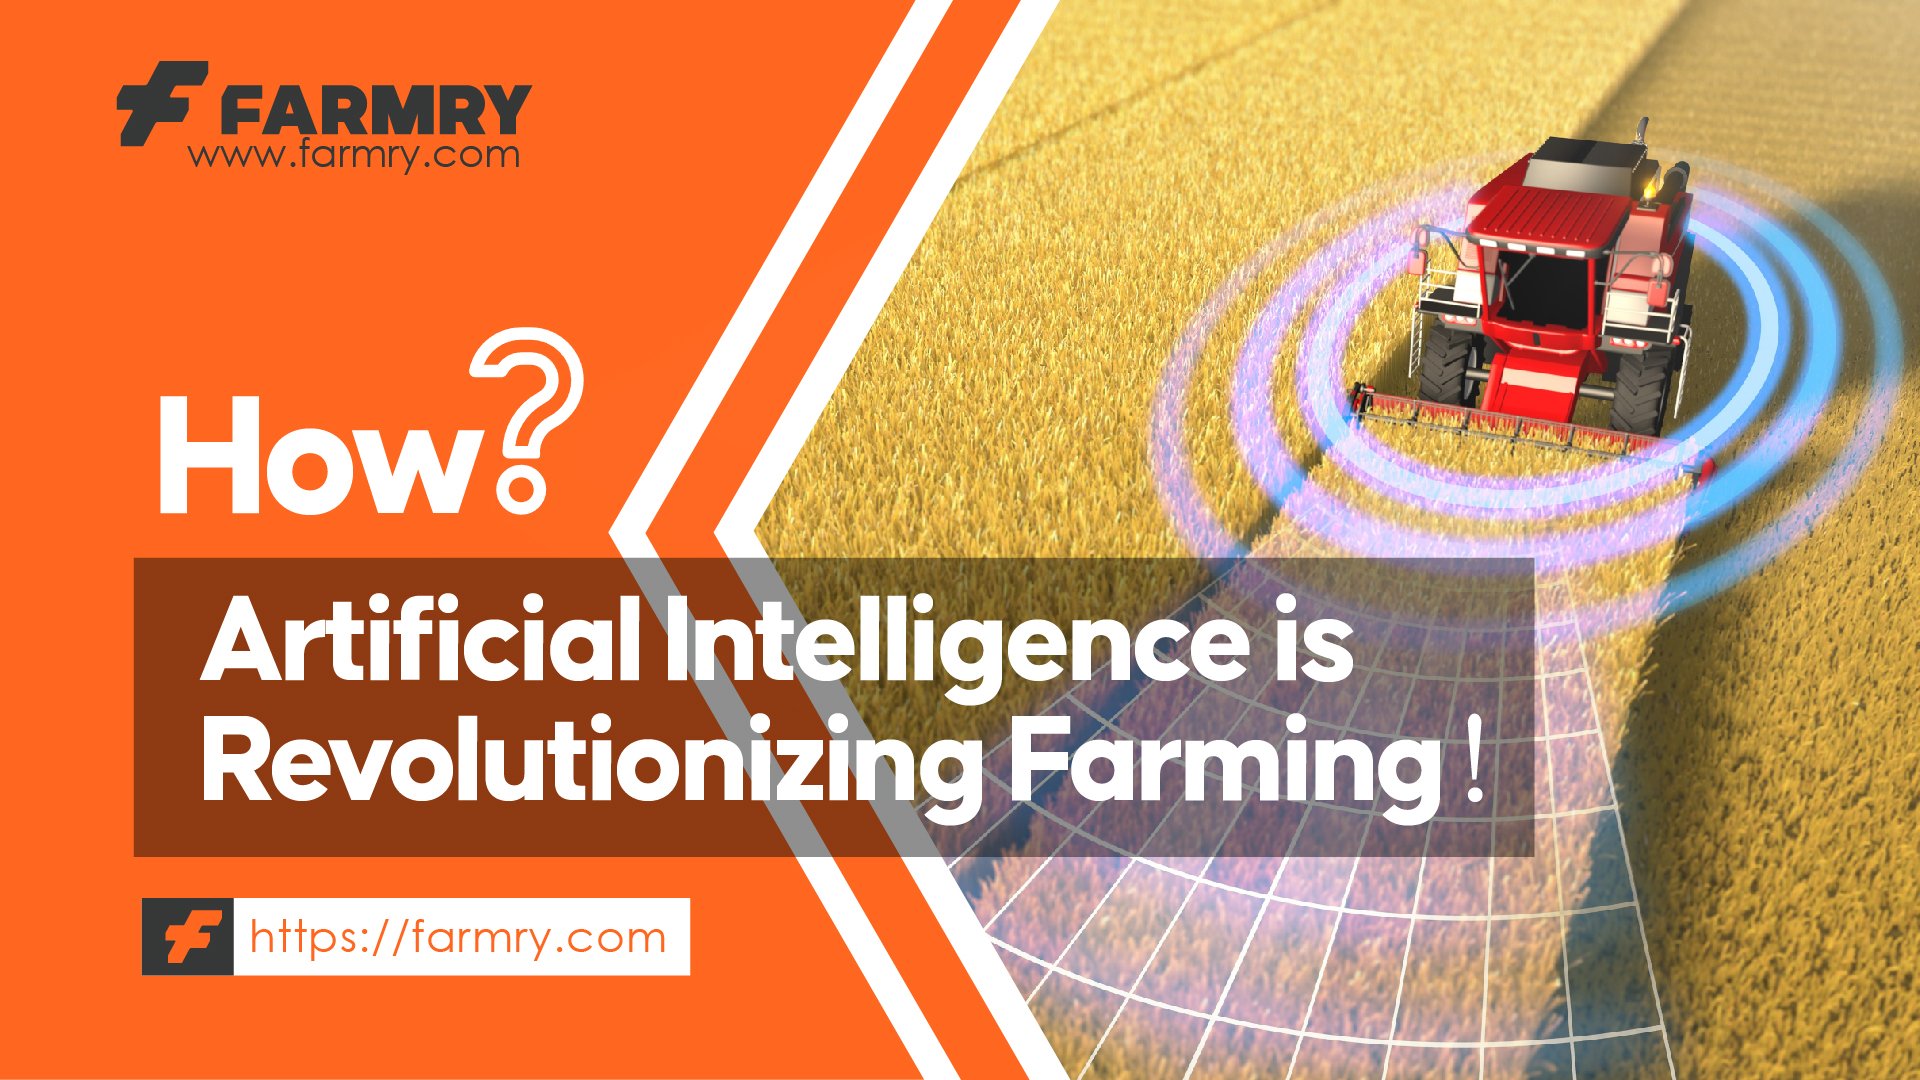 AI is Revolutionizing Farming